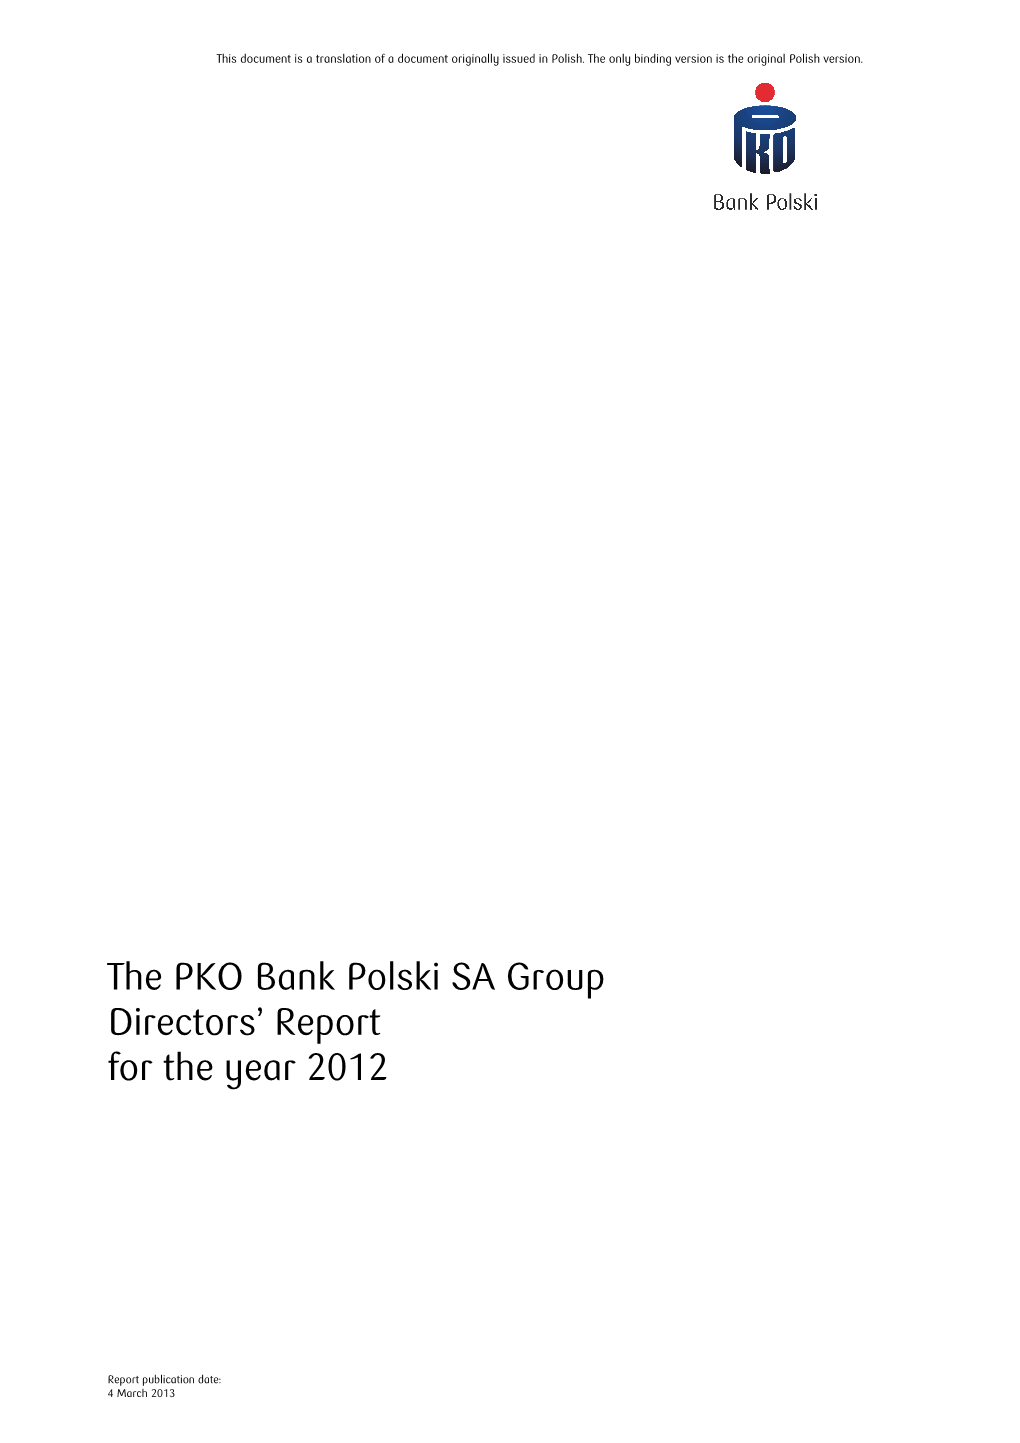 The PKO Bank Polski SA Group Directors' Report for the Year 2012